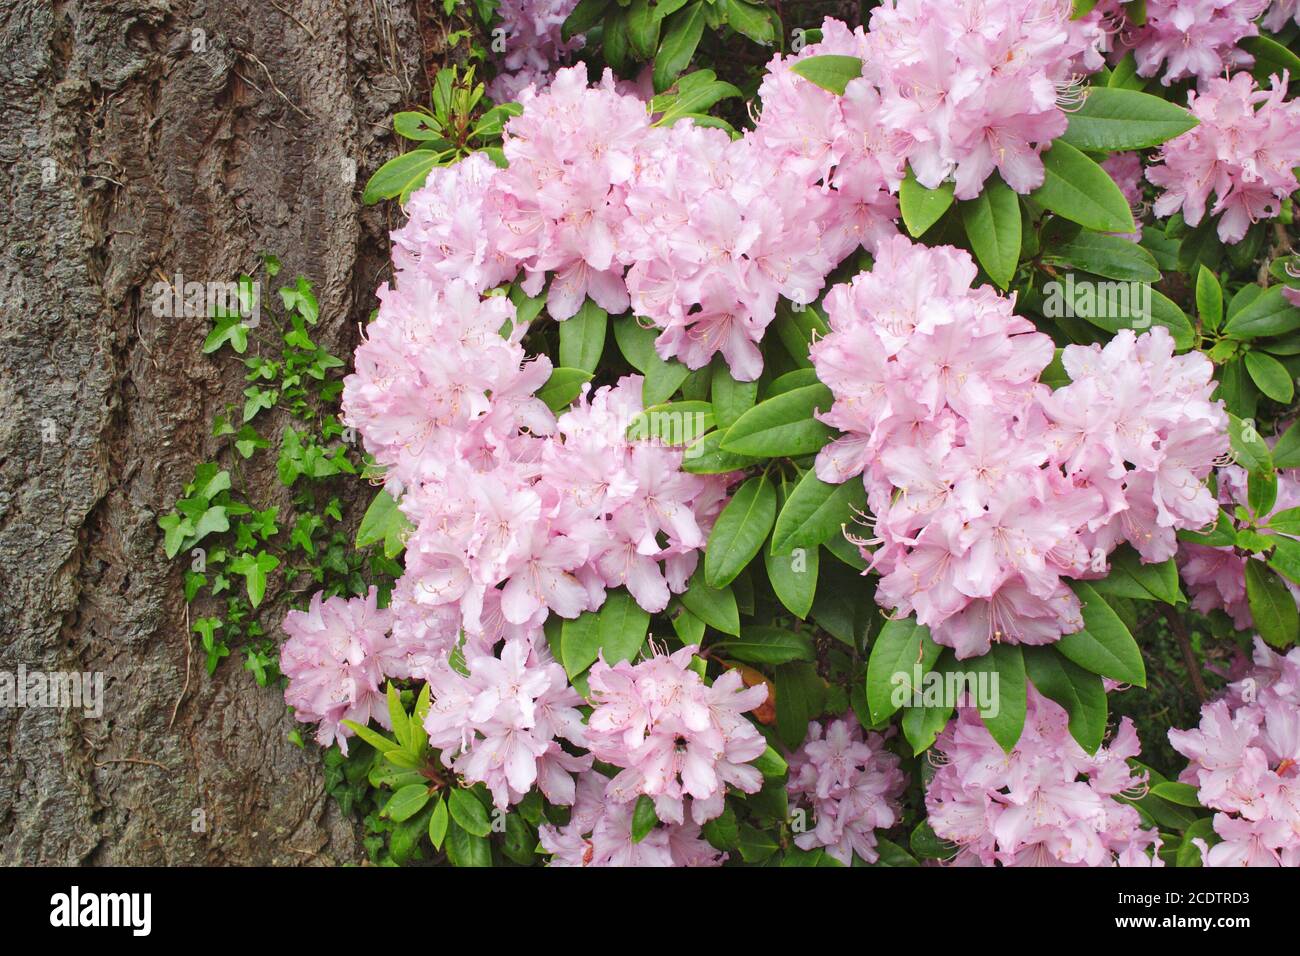 Rhododendron in a garden Stock Photo